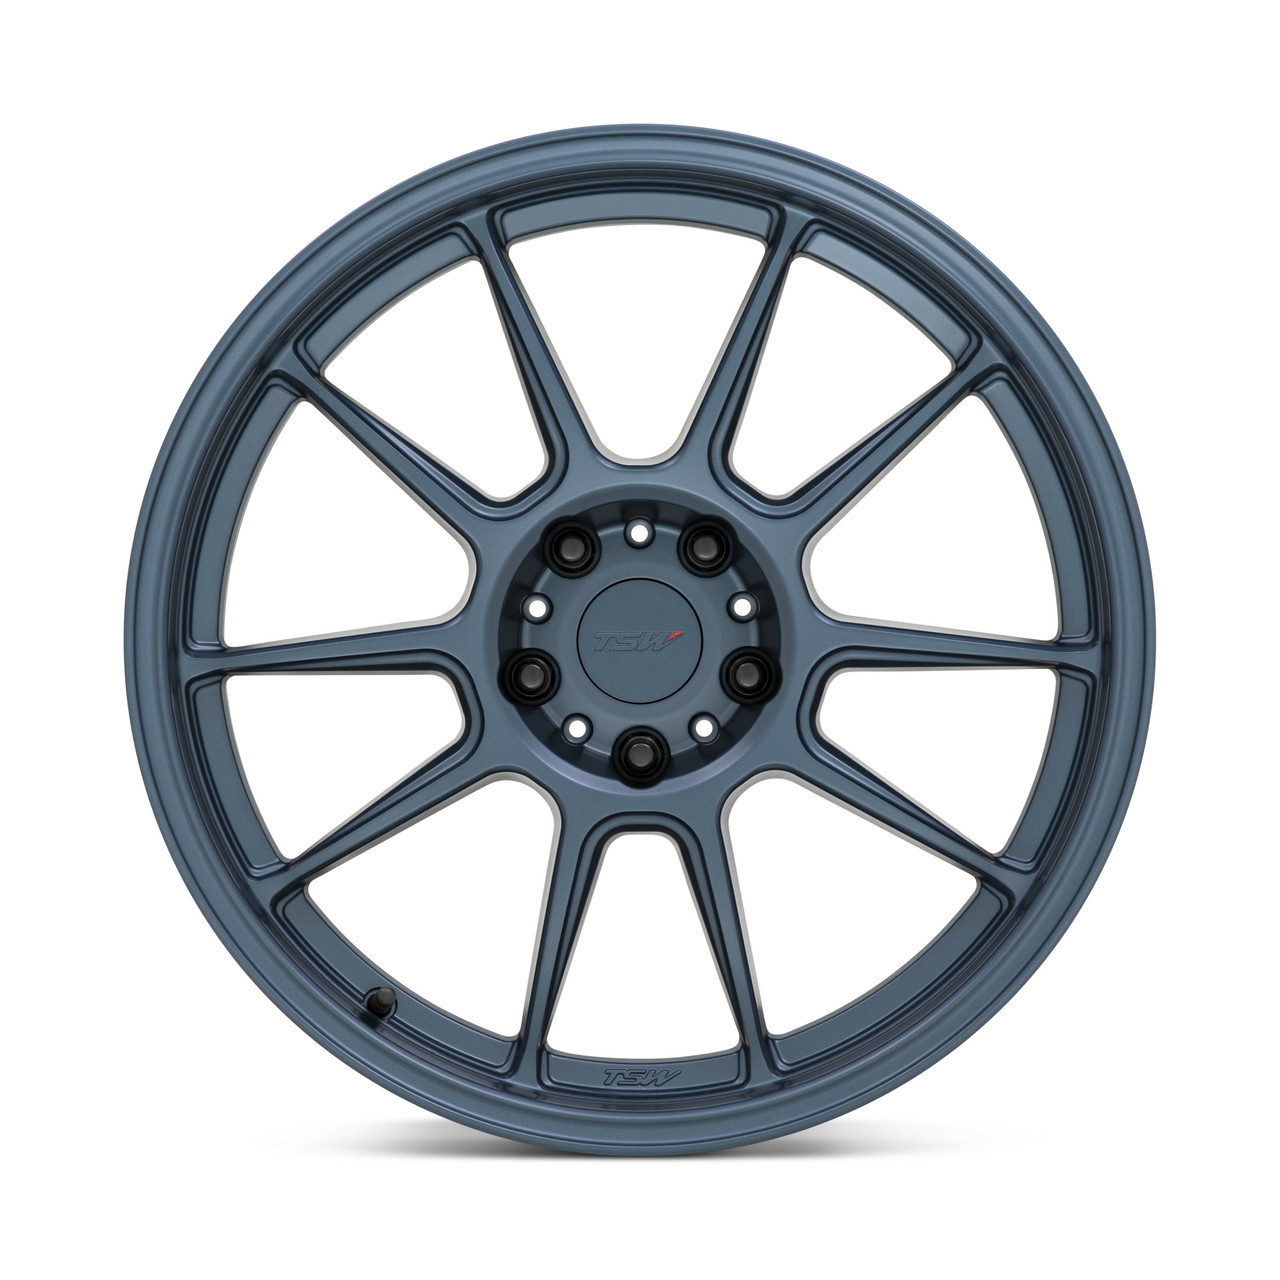 Set 4 TSW Imatra 18x10.5 5x4.5 Satin Dark Blue Wheels 18" 25mm Rims